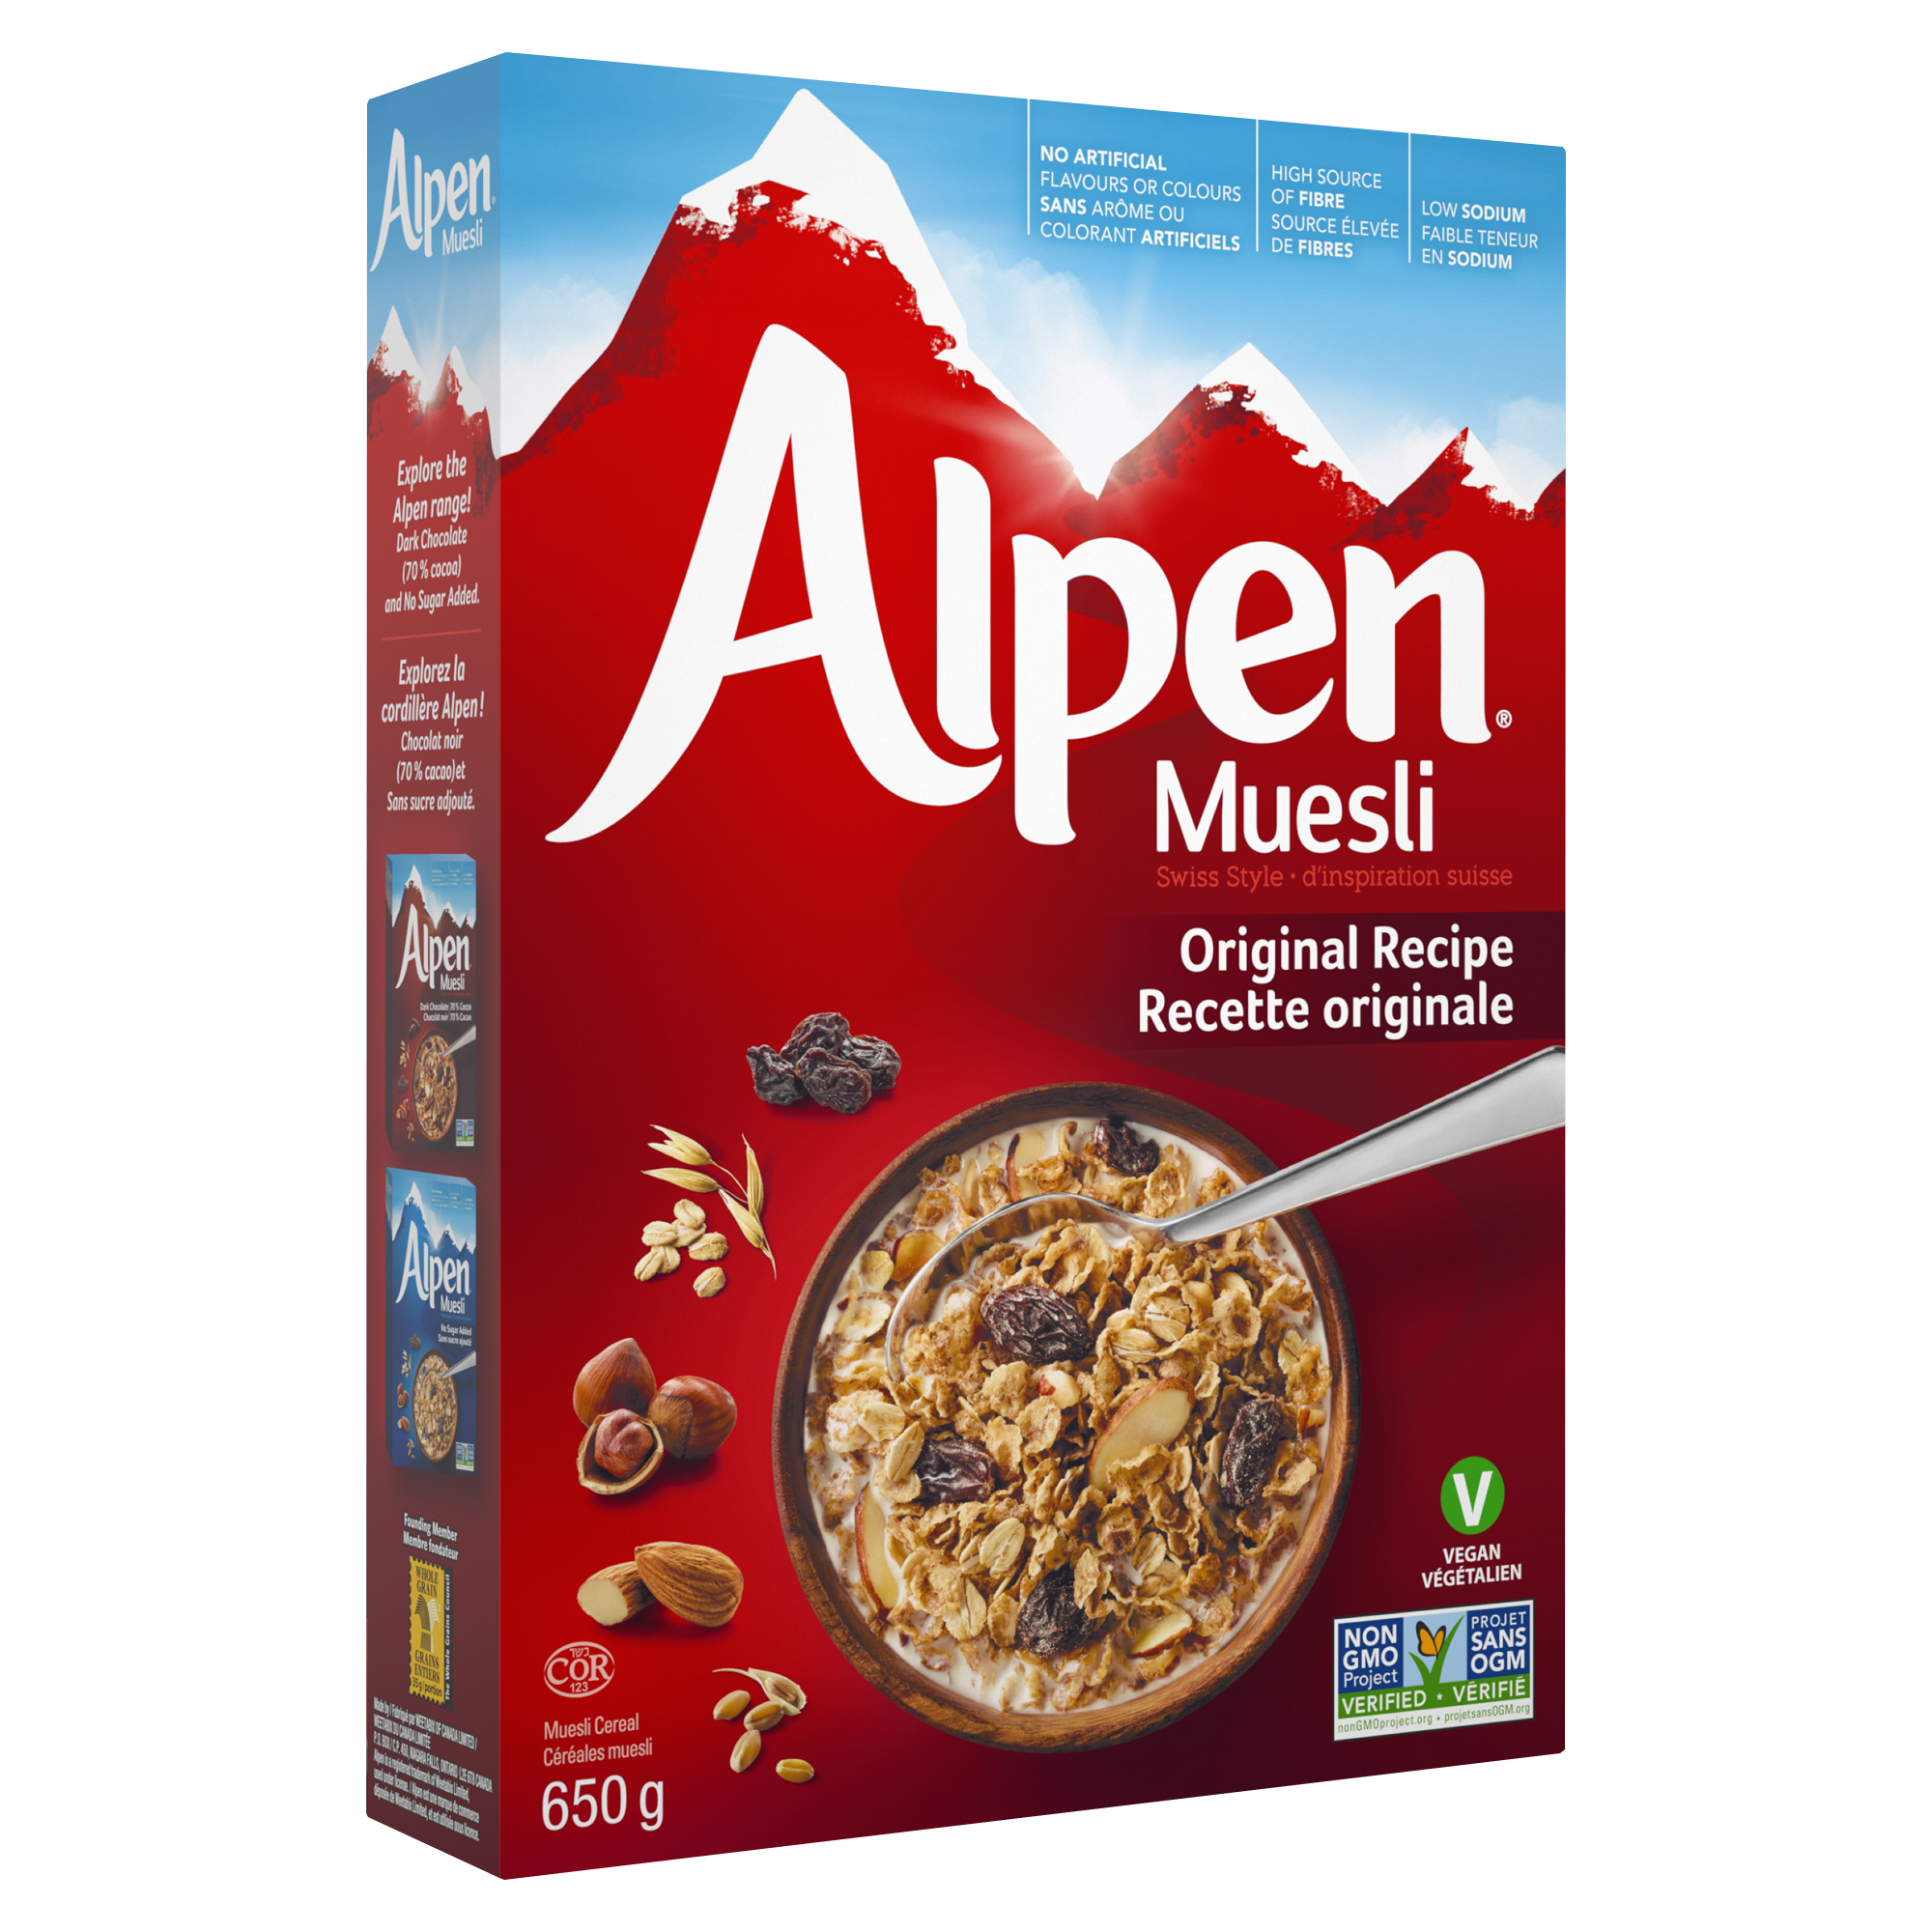 Alpen Muesli - Original Recipe cereal box